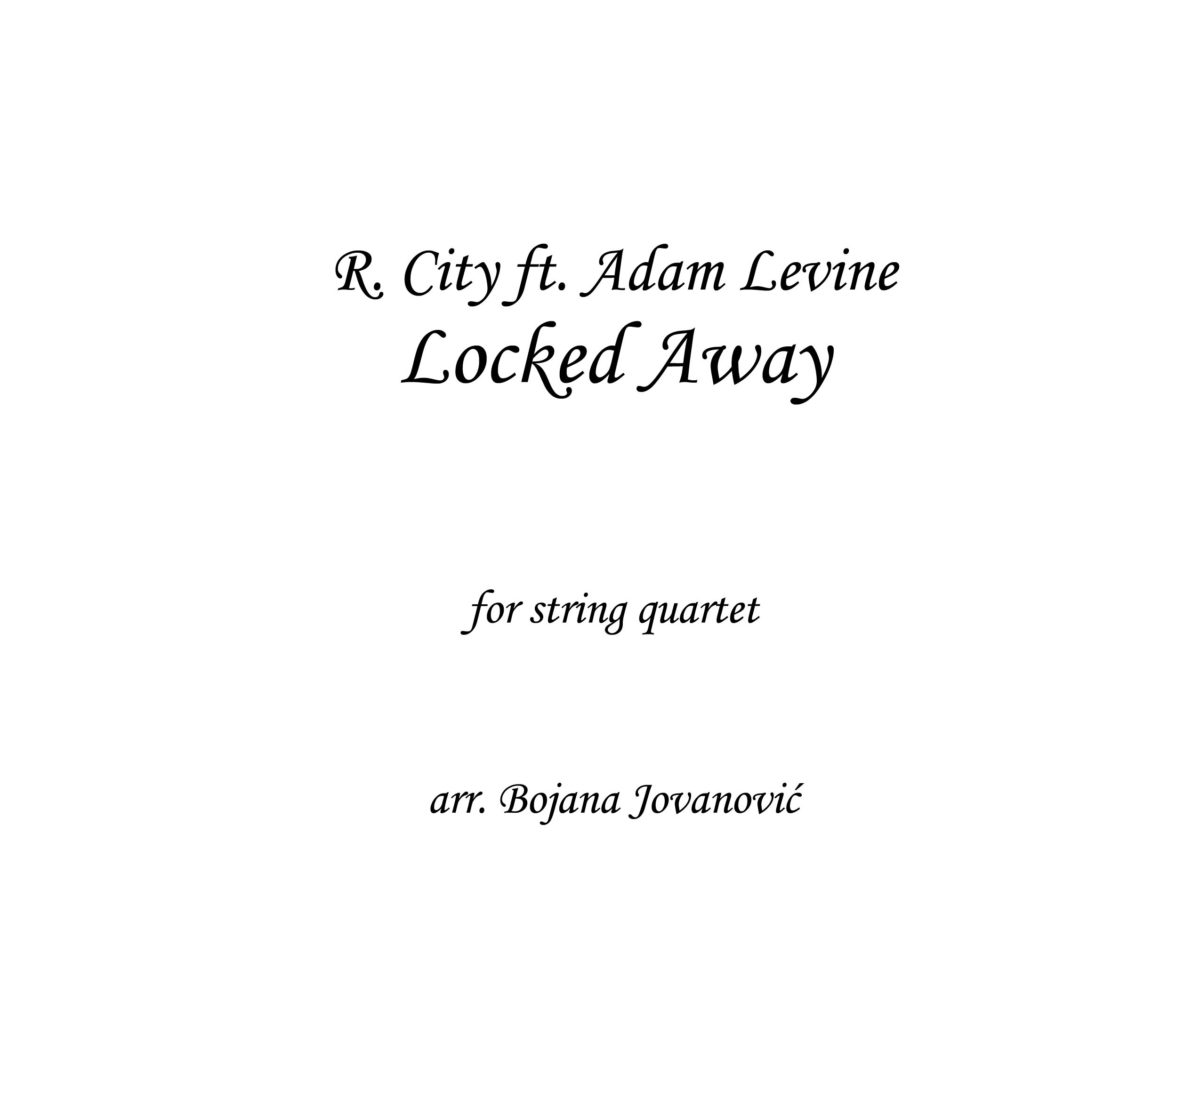 Locked Away (R. City ft Adam Levine) - Sheet Music